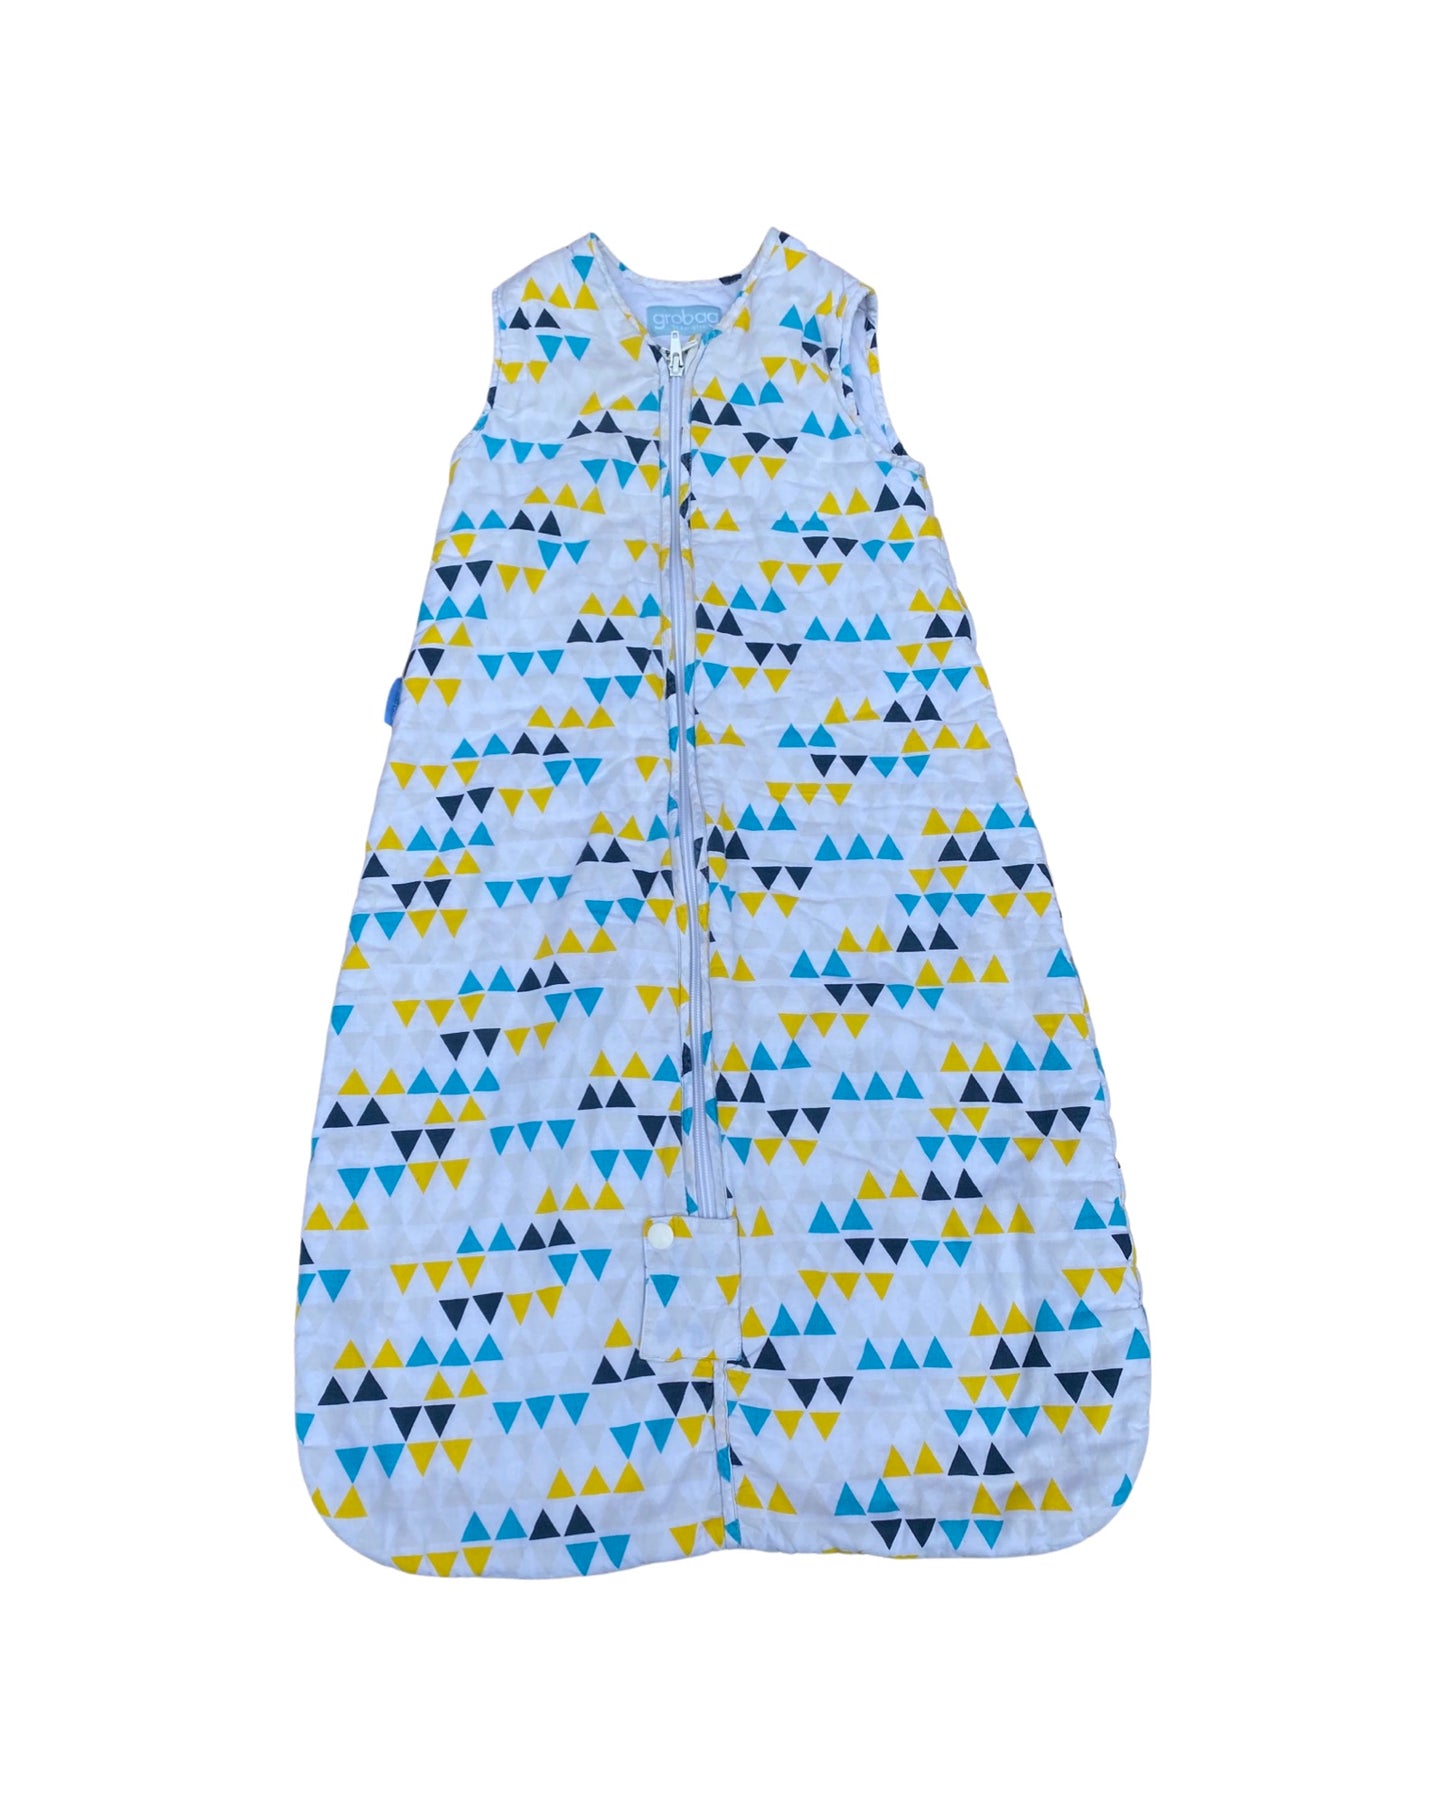 Grobag multicolour triangle geo print sleeping bag (6-18mths)